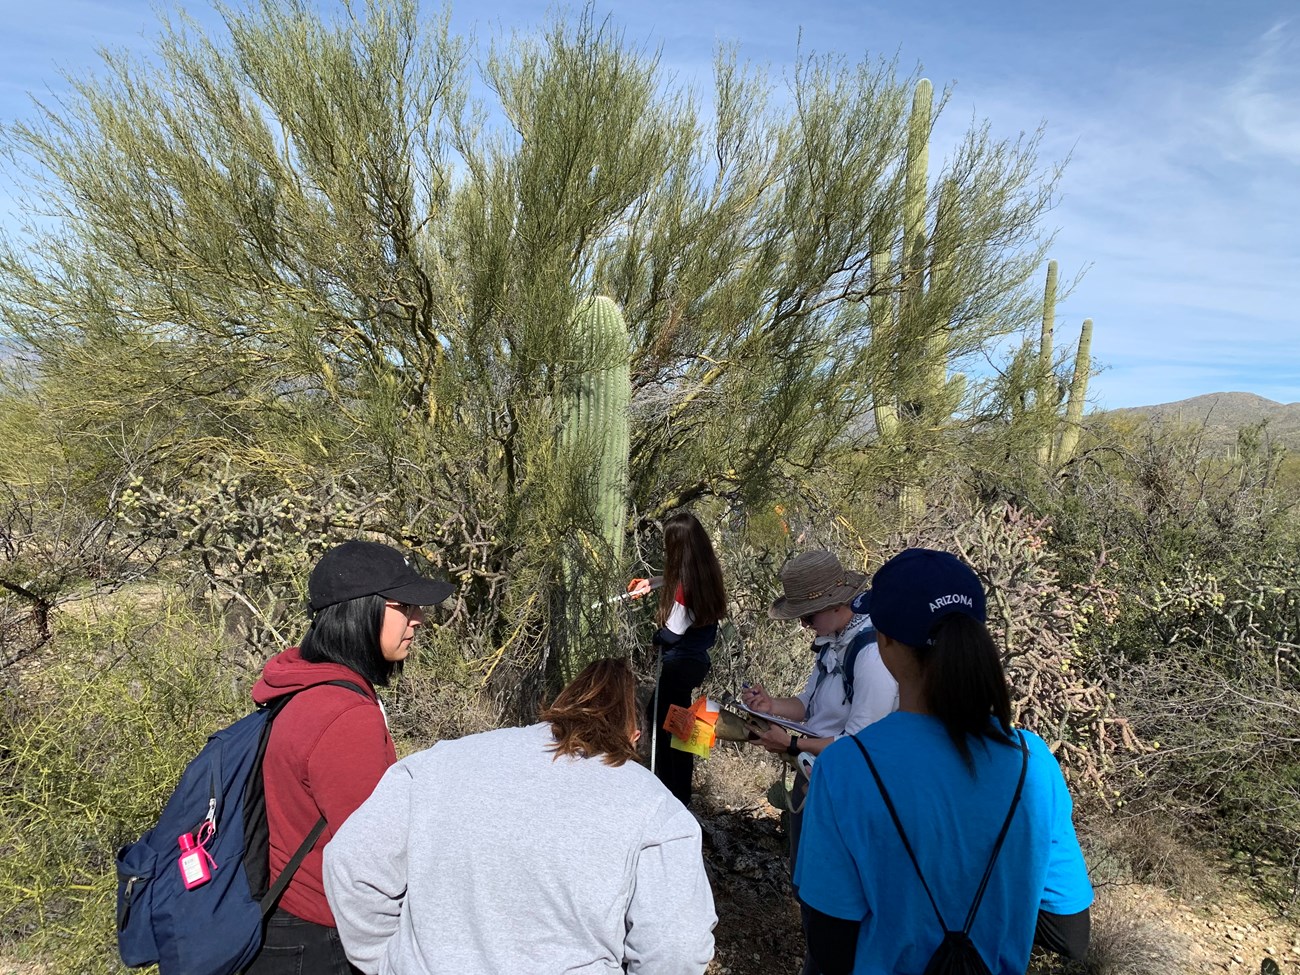 Students around a saguaro with its nurse tree.